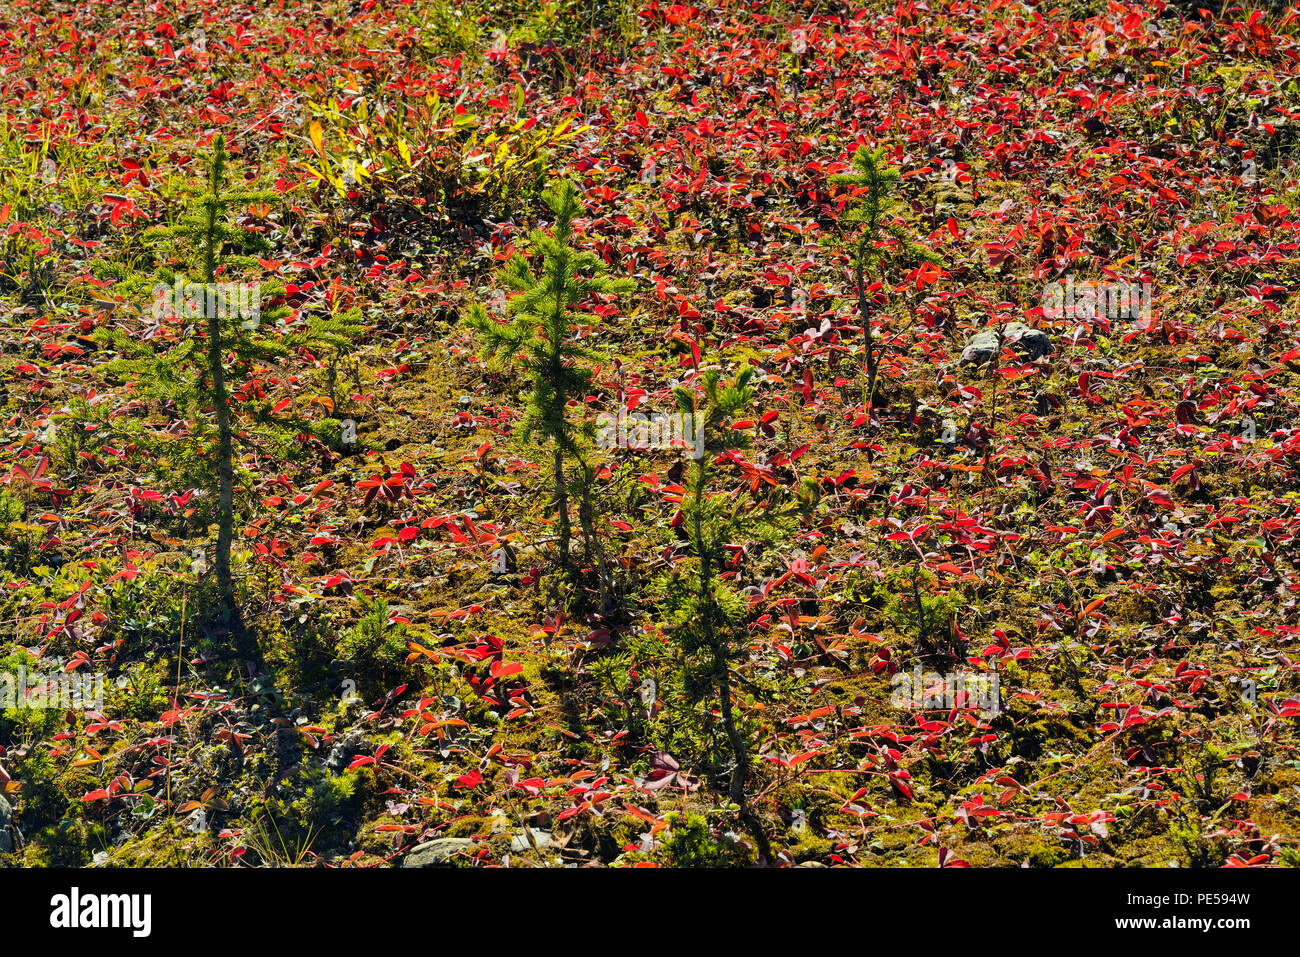 Wild strawberry (Fragaria vesca) colony in autumn strawberry, Spray Lake Provincial Park, Alberta, Canada Stock Photo